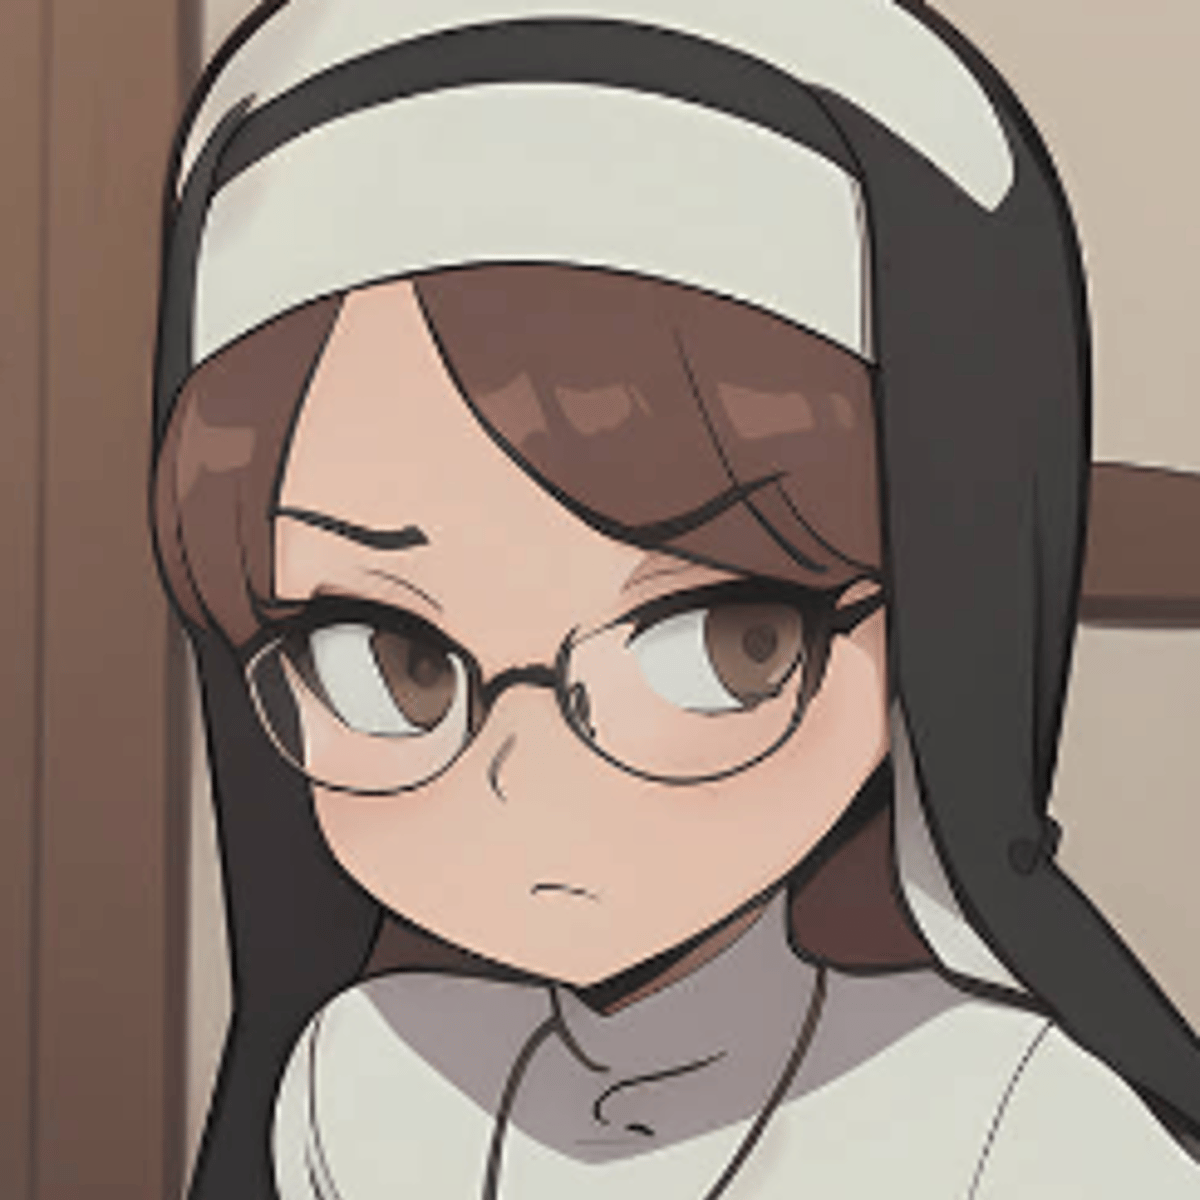 That one nun